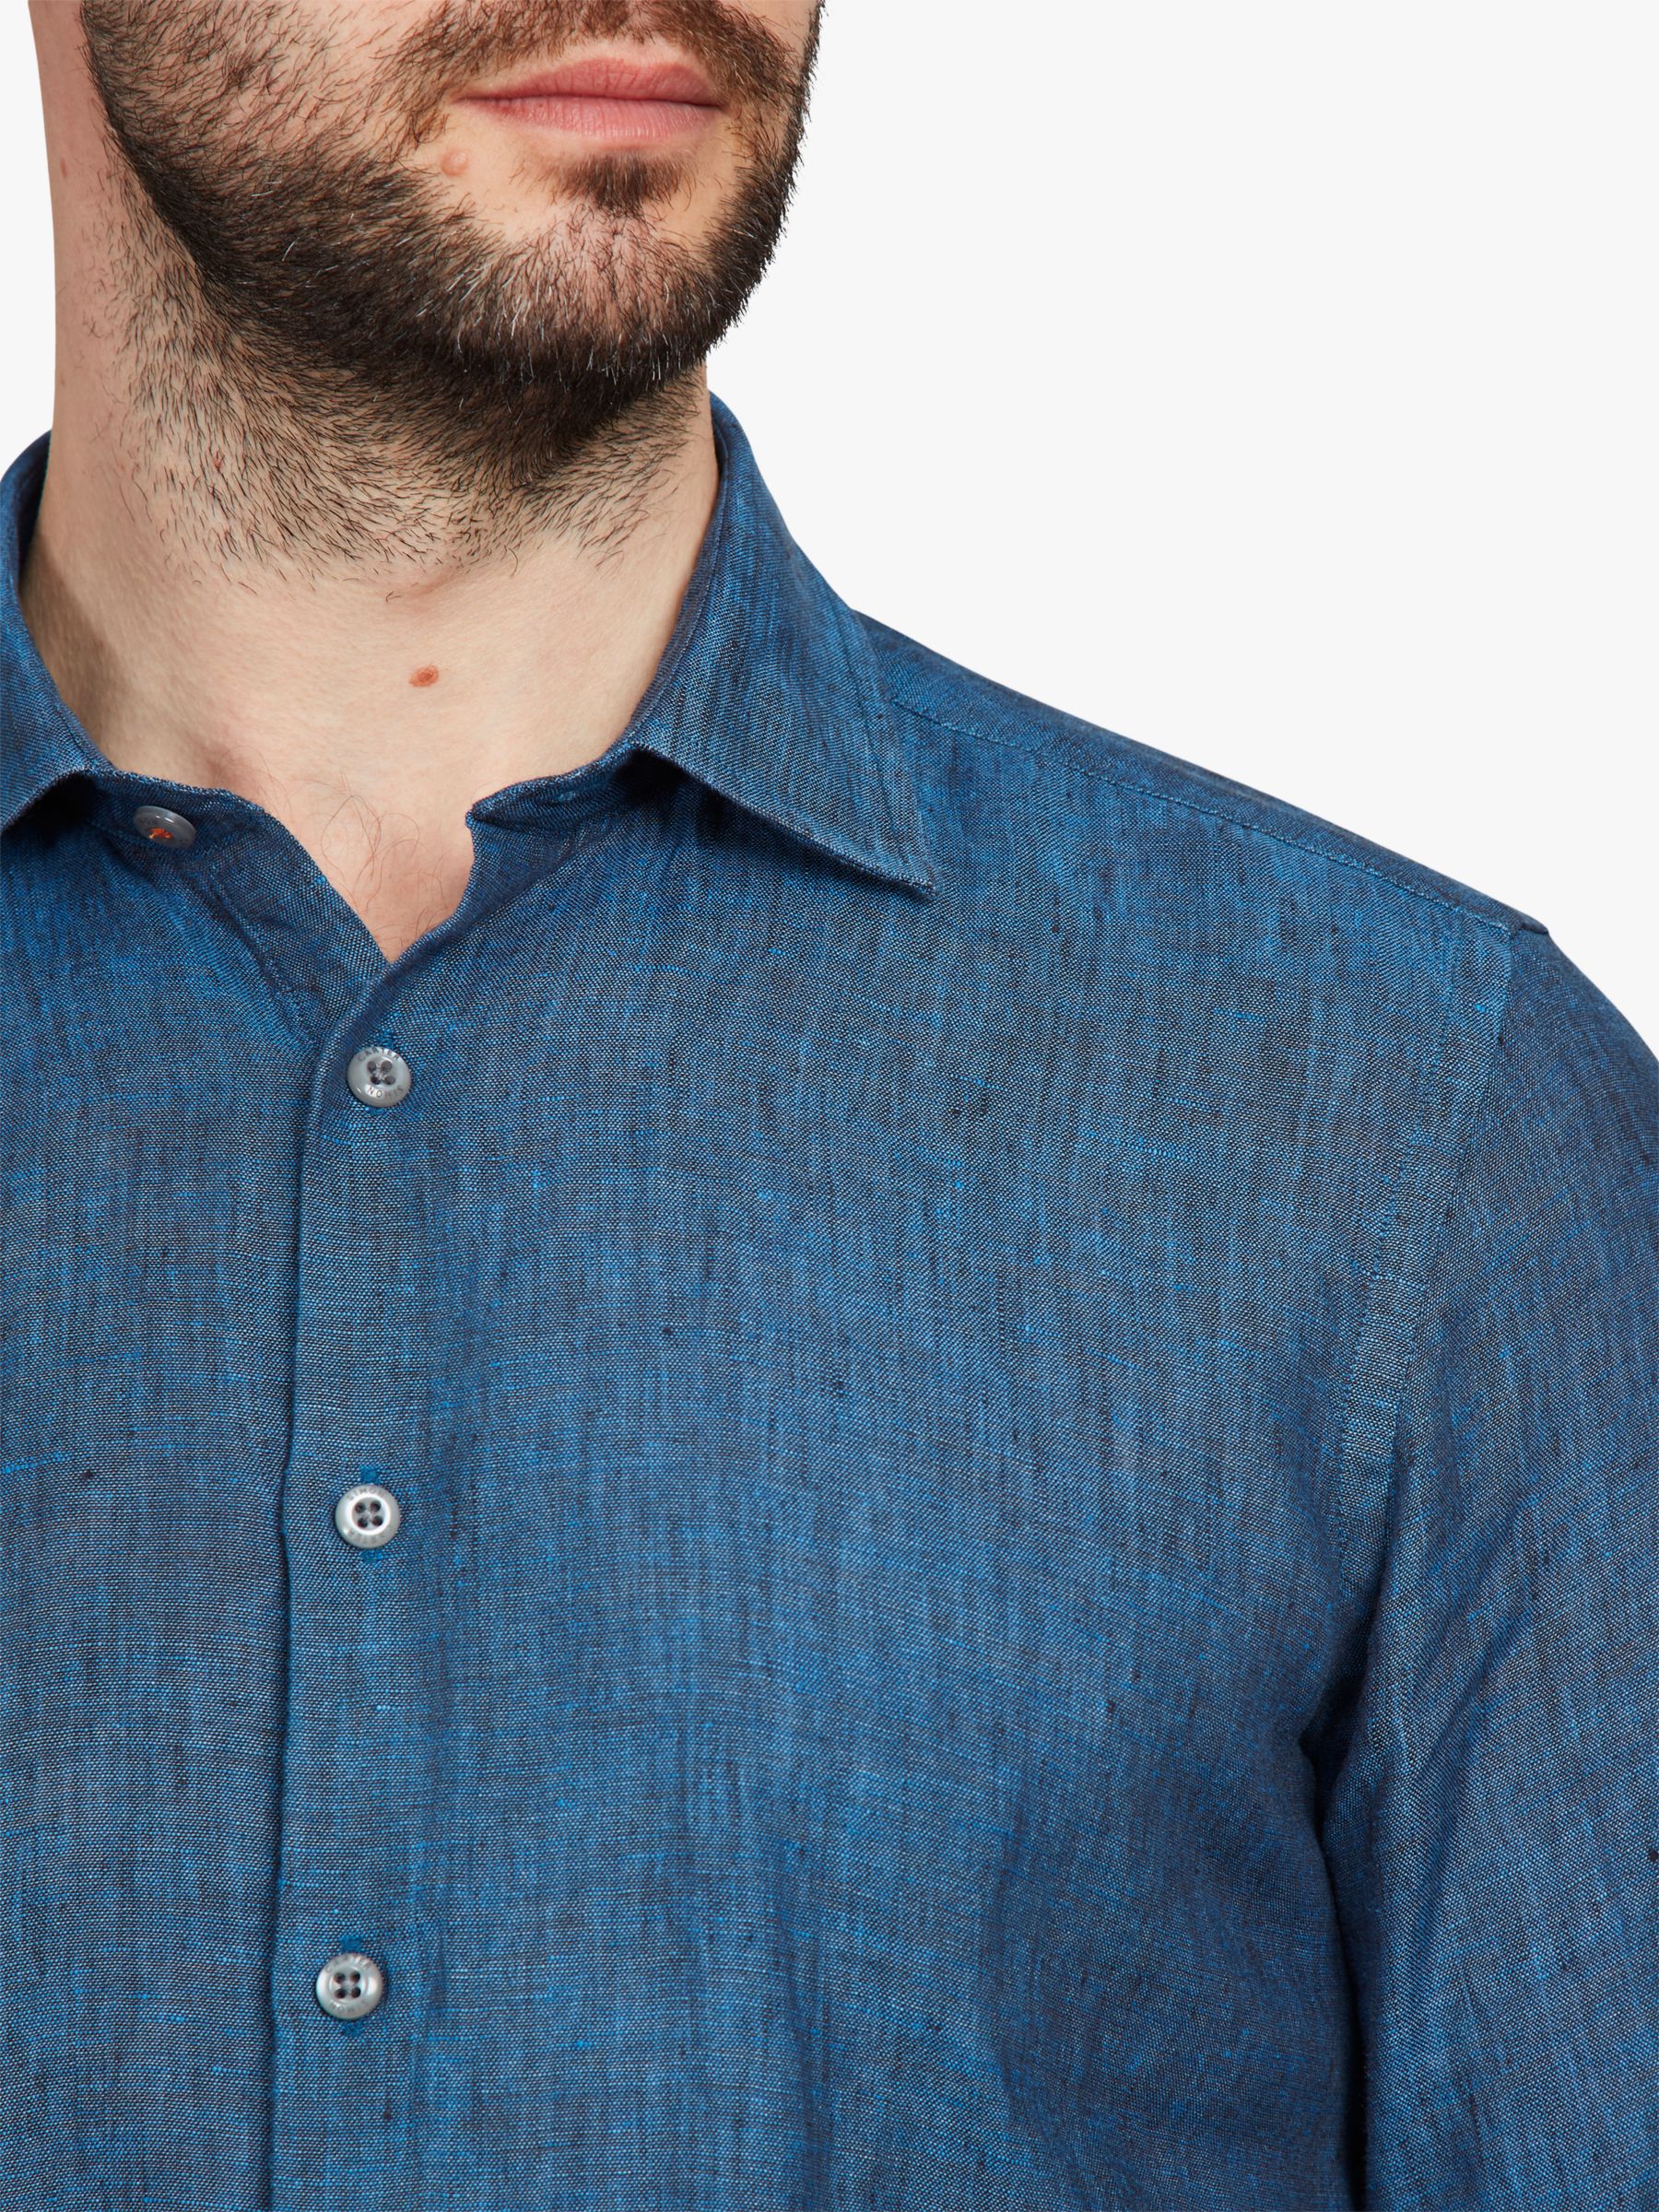 Buy Simon Carter Plain Linen Shirt, Indigo Online at johnlewis.com